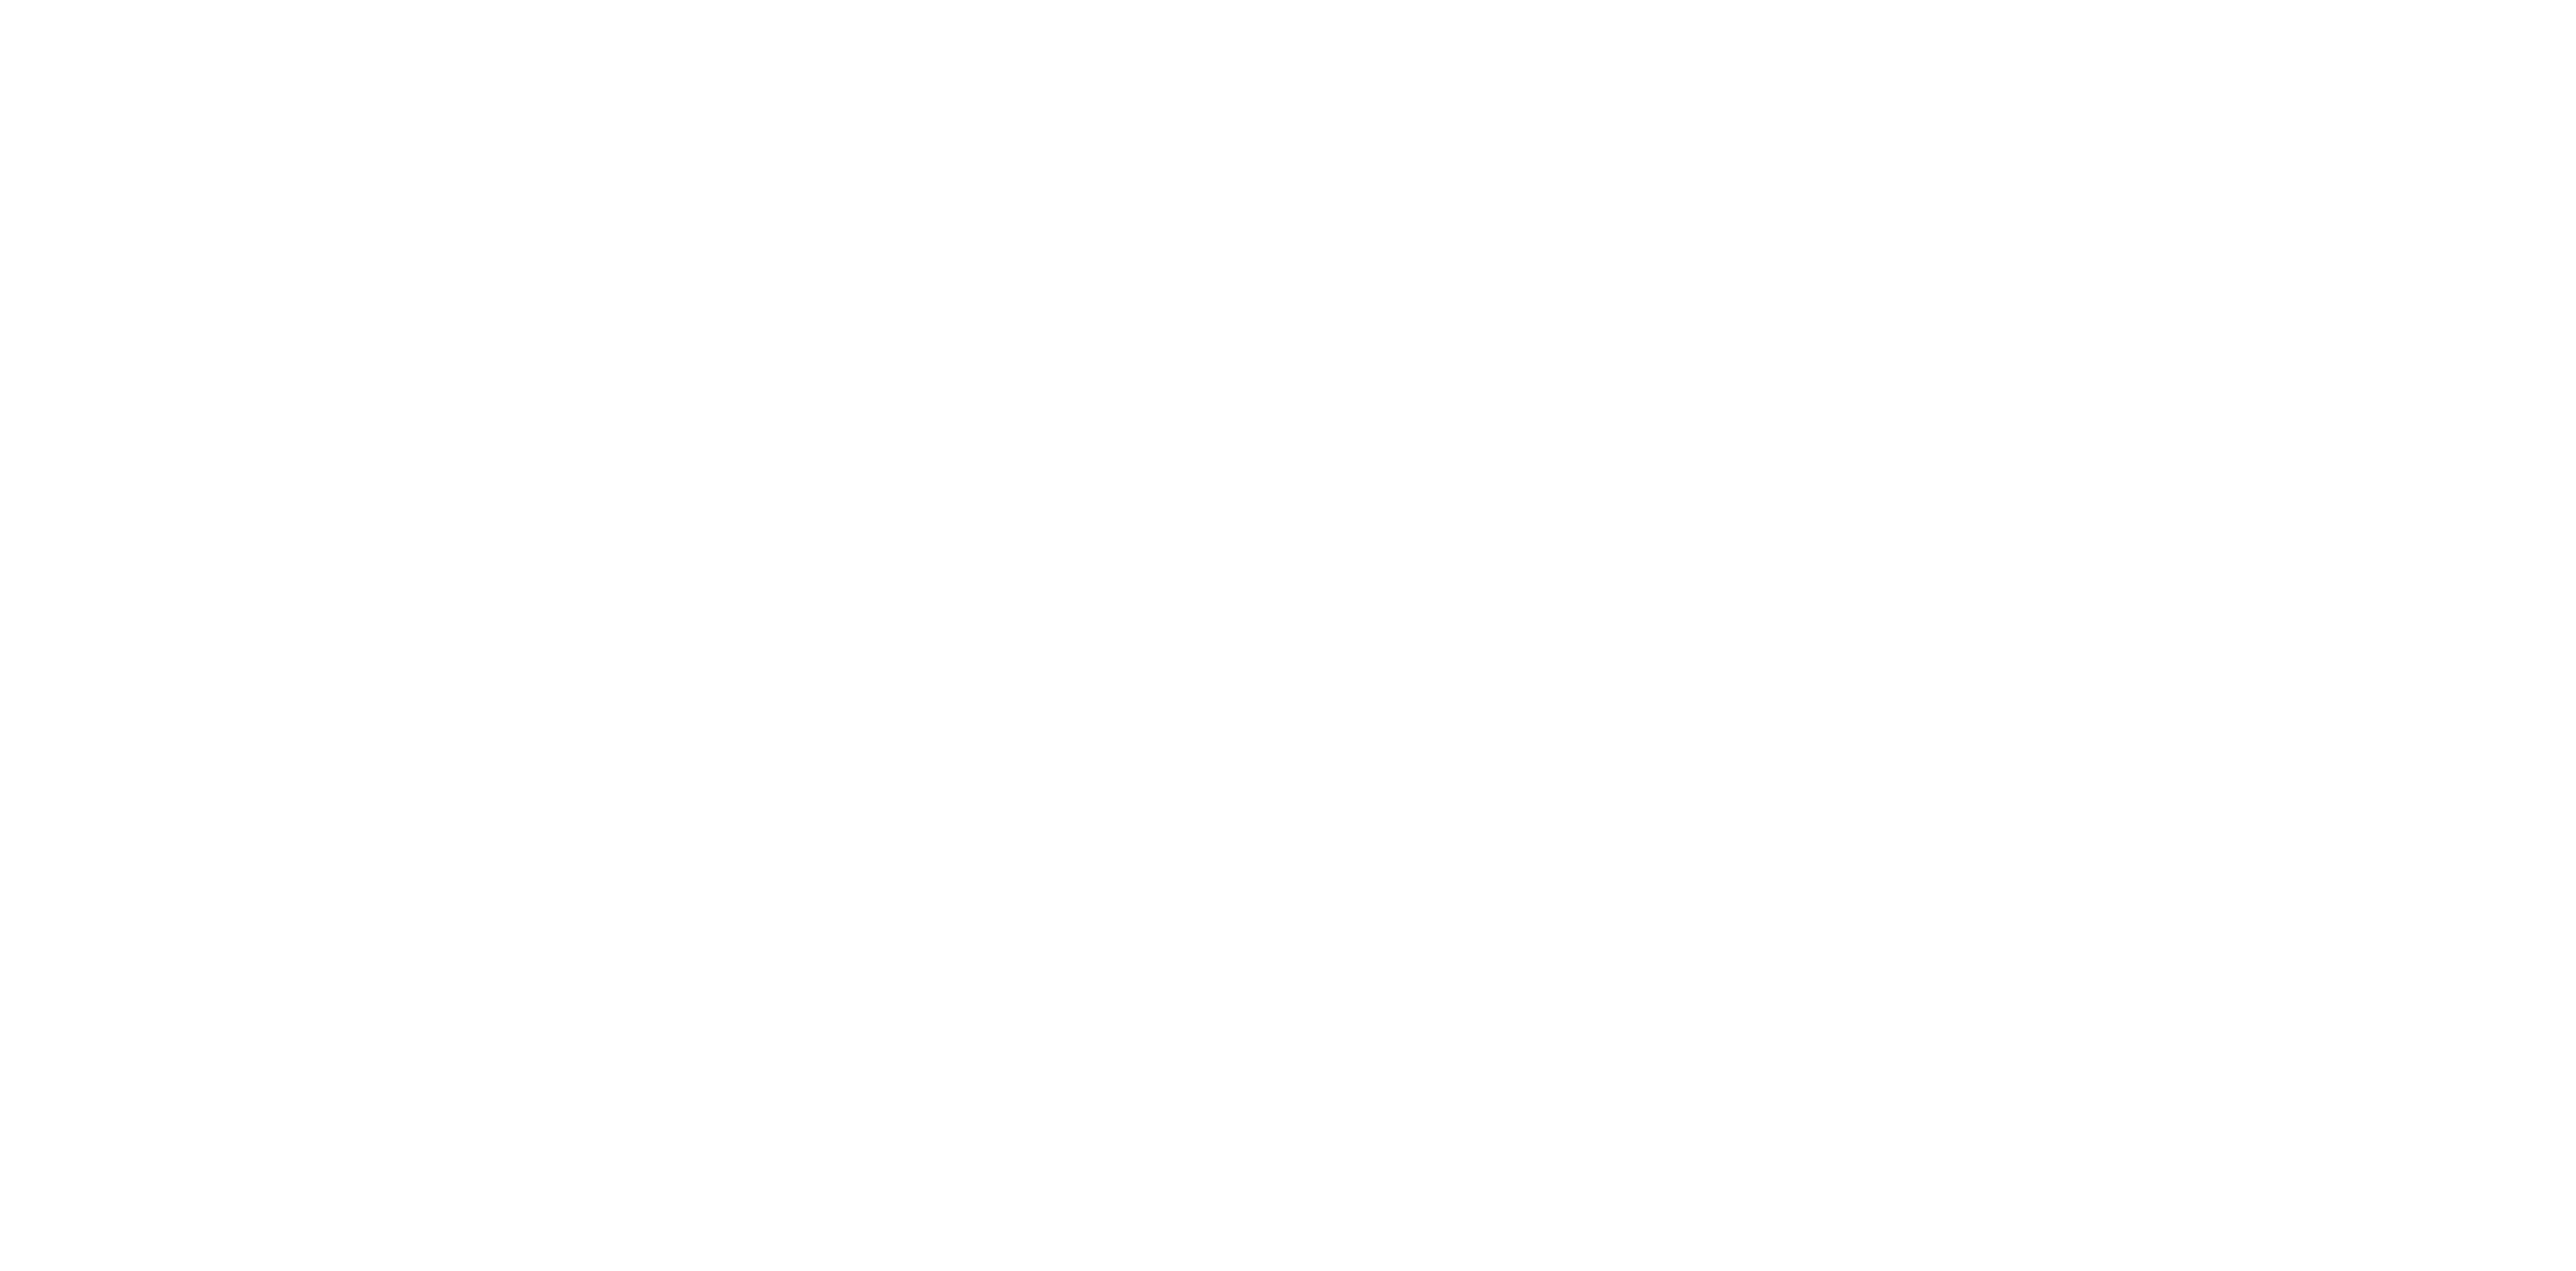 Port of NEOM logo in black and white